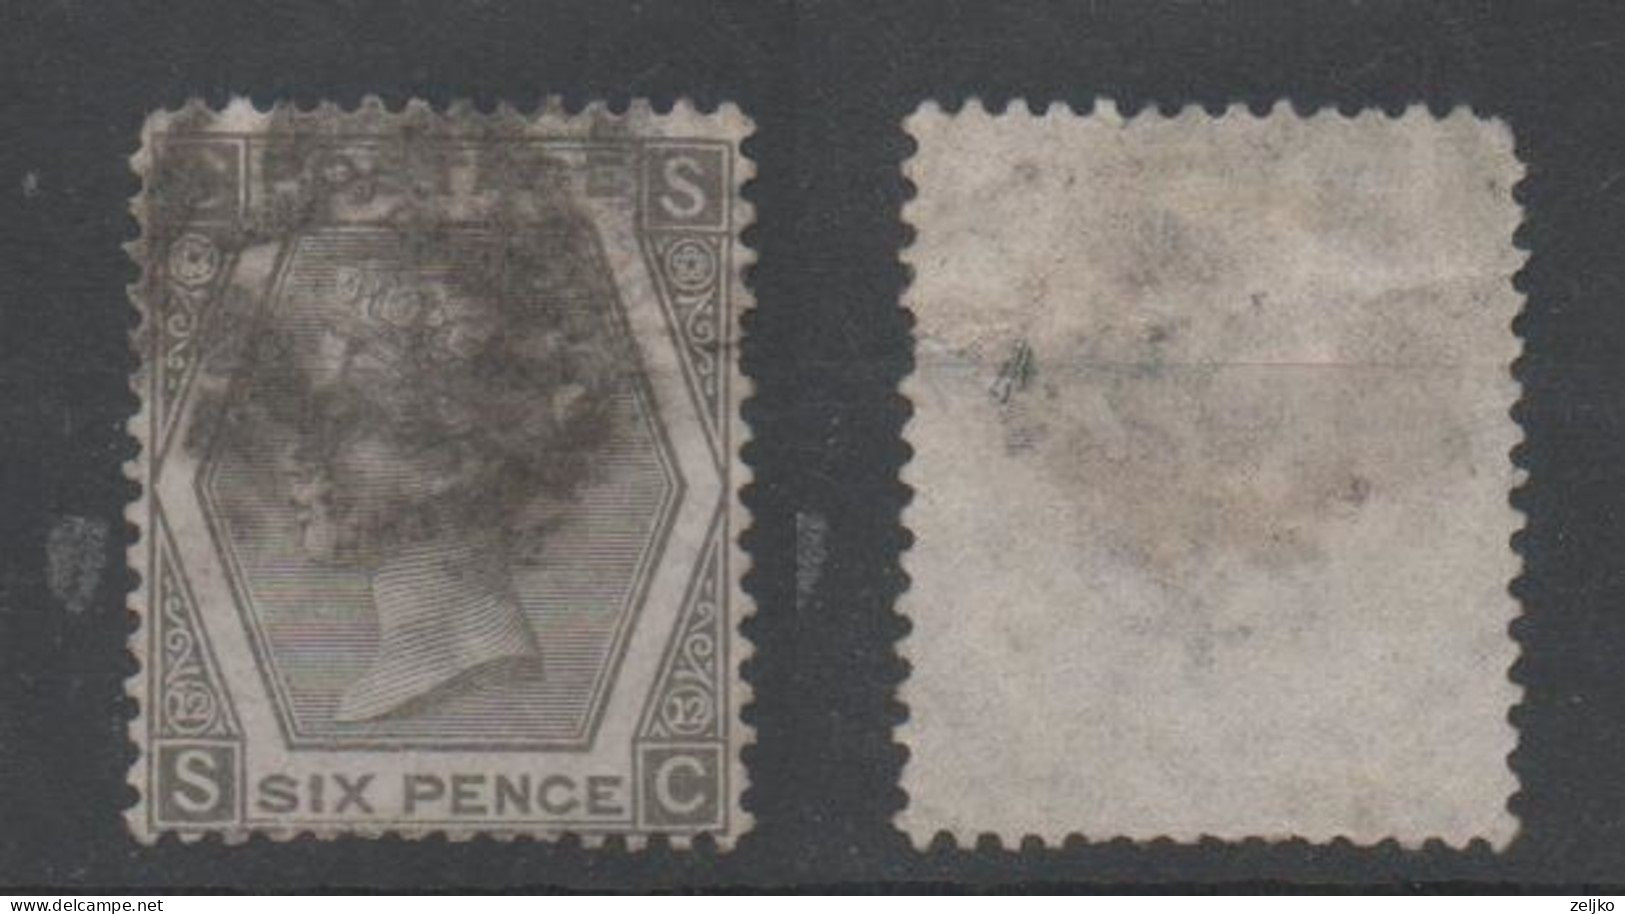 UK, GB, Great Britain, Used, 1872, Michel 39 - Usati